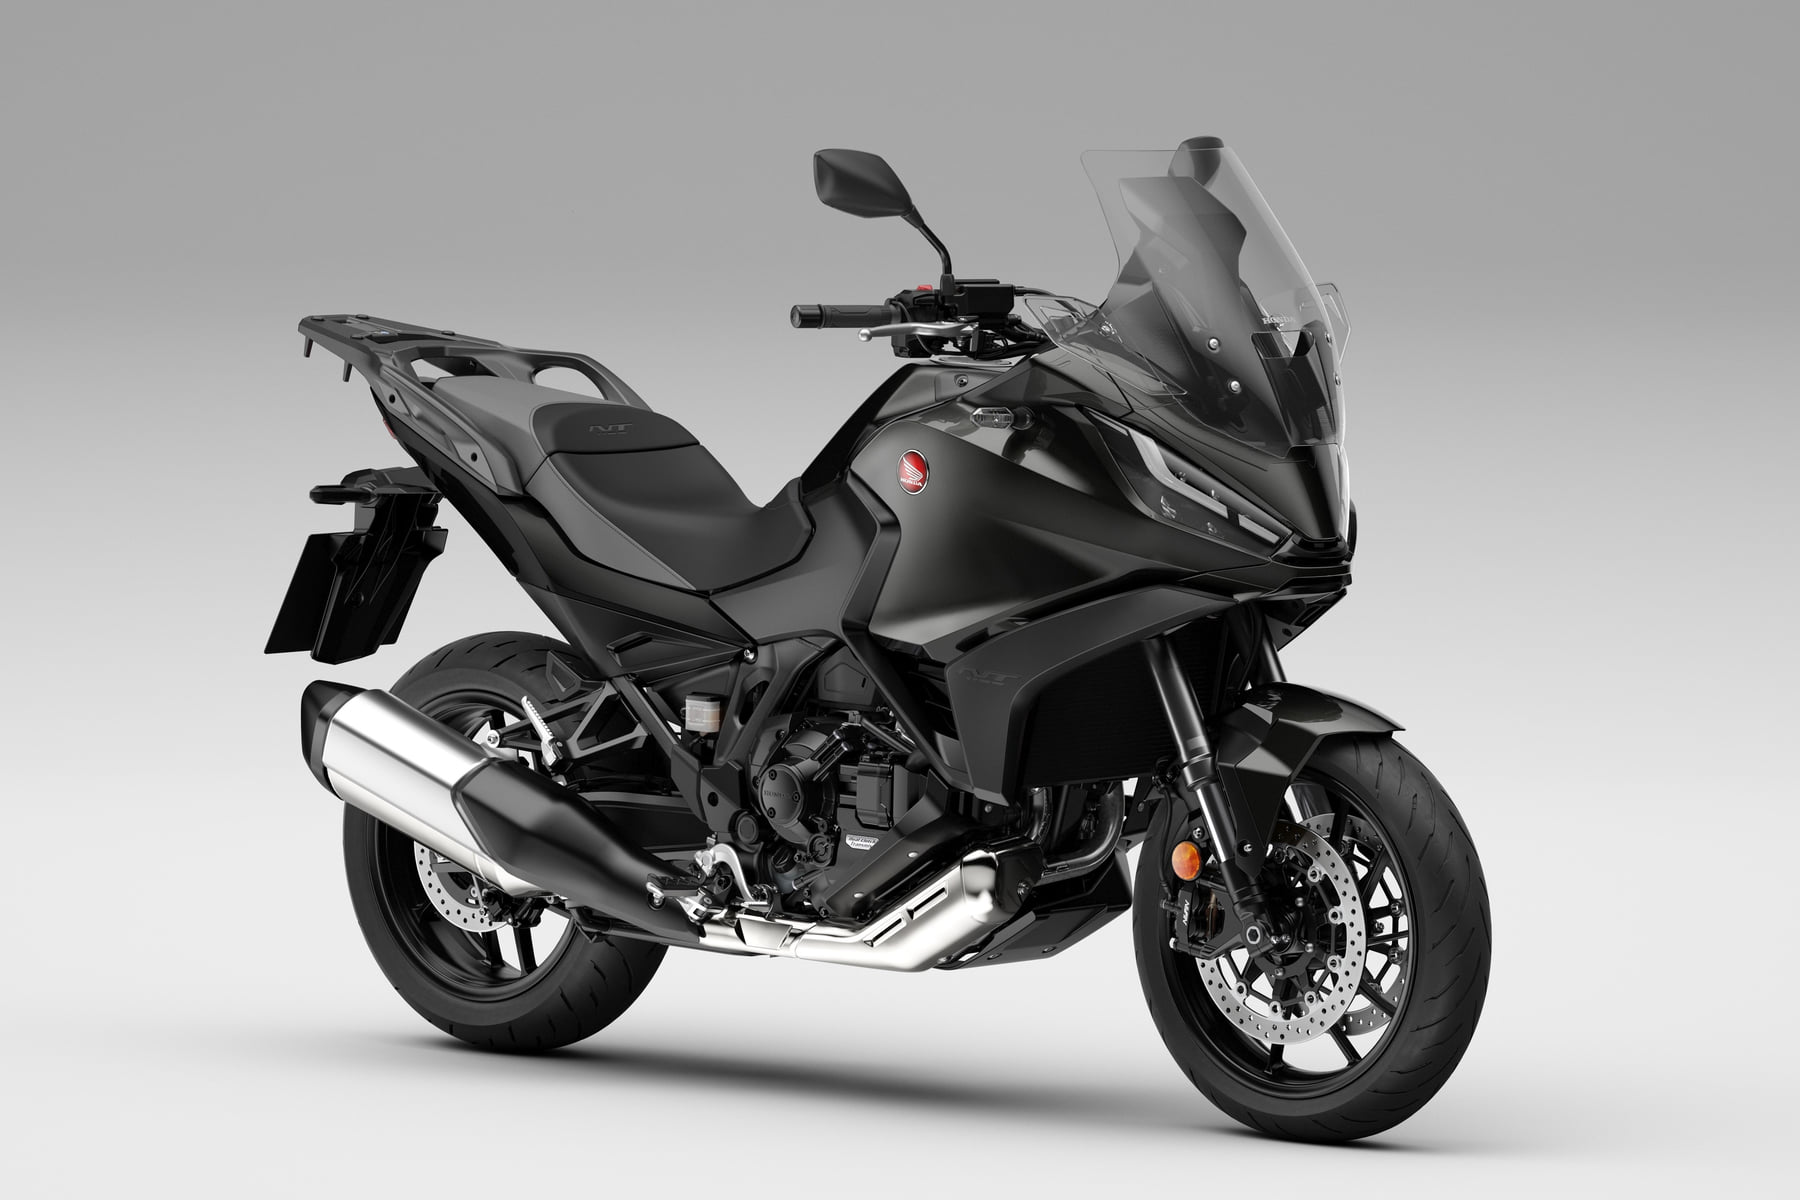 Motos Honda e Yamaha para 2023